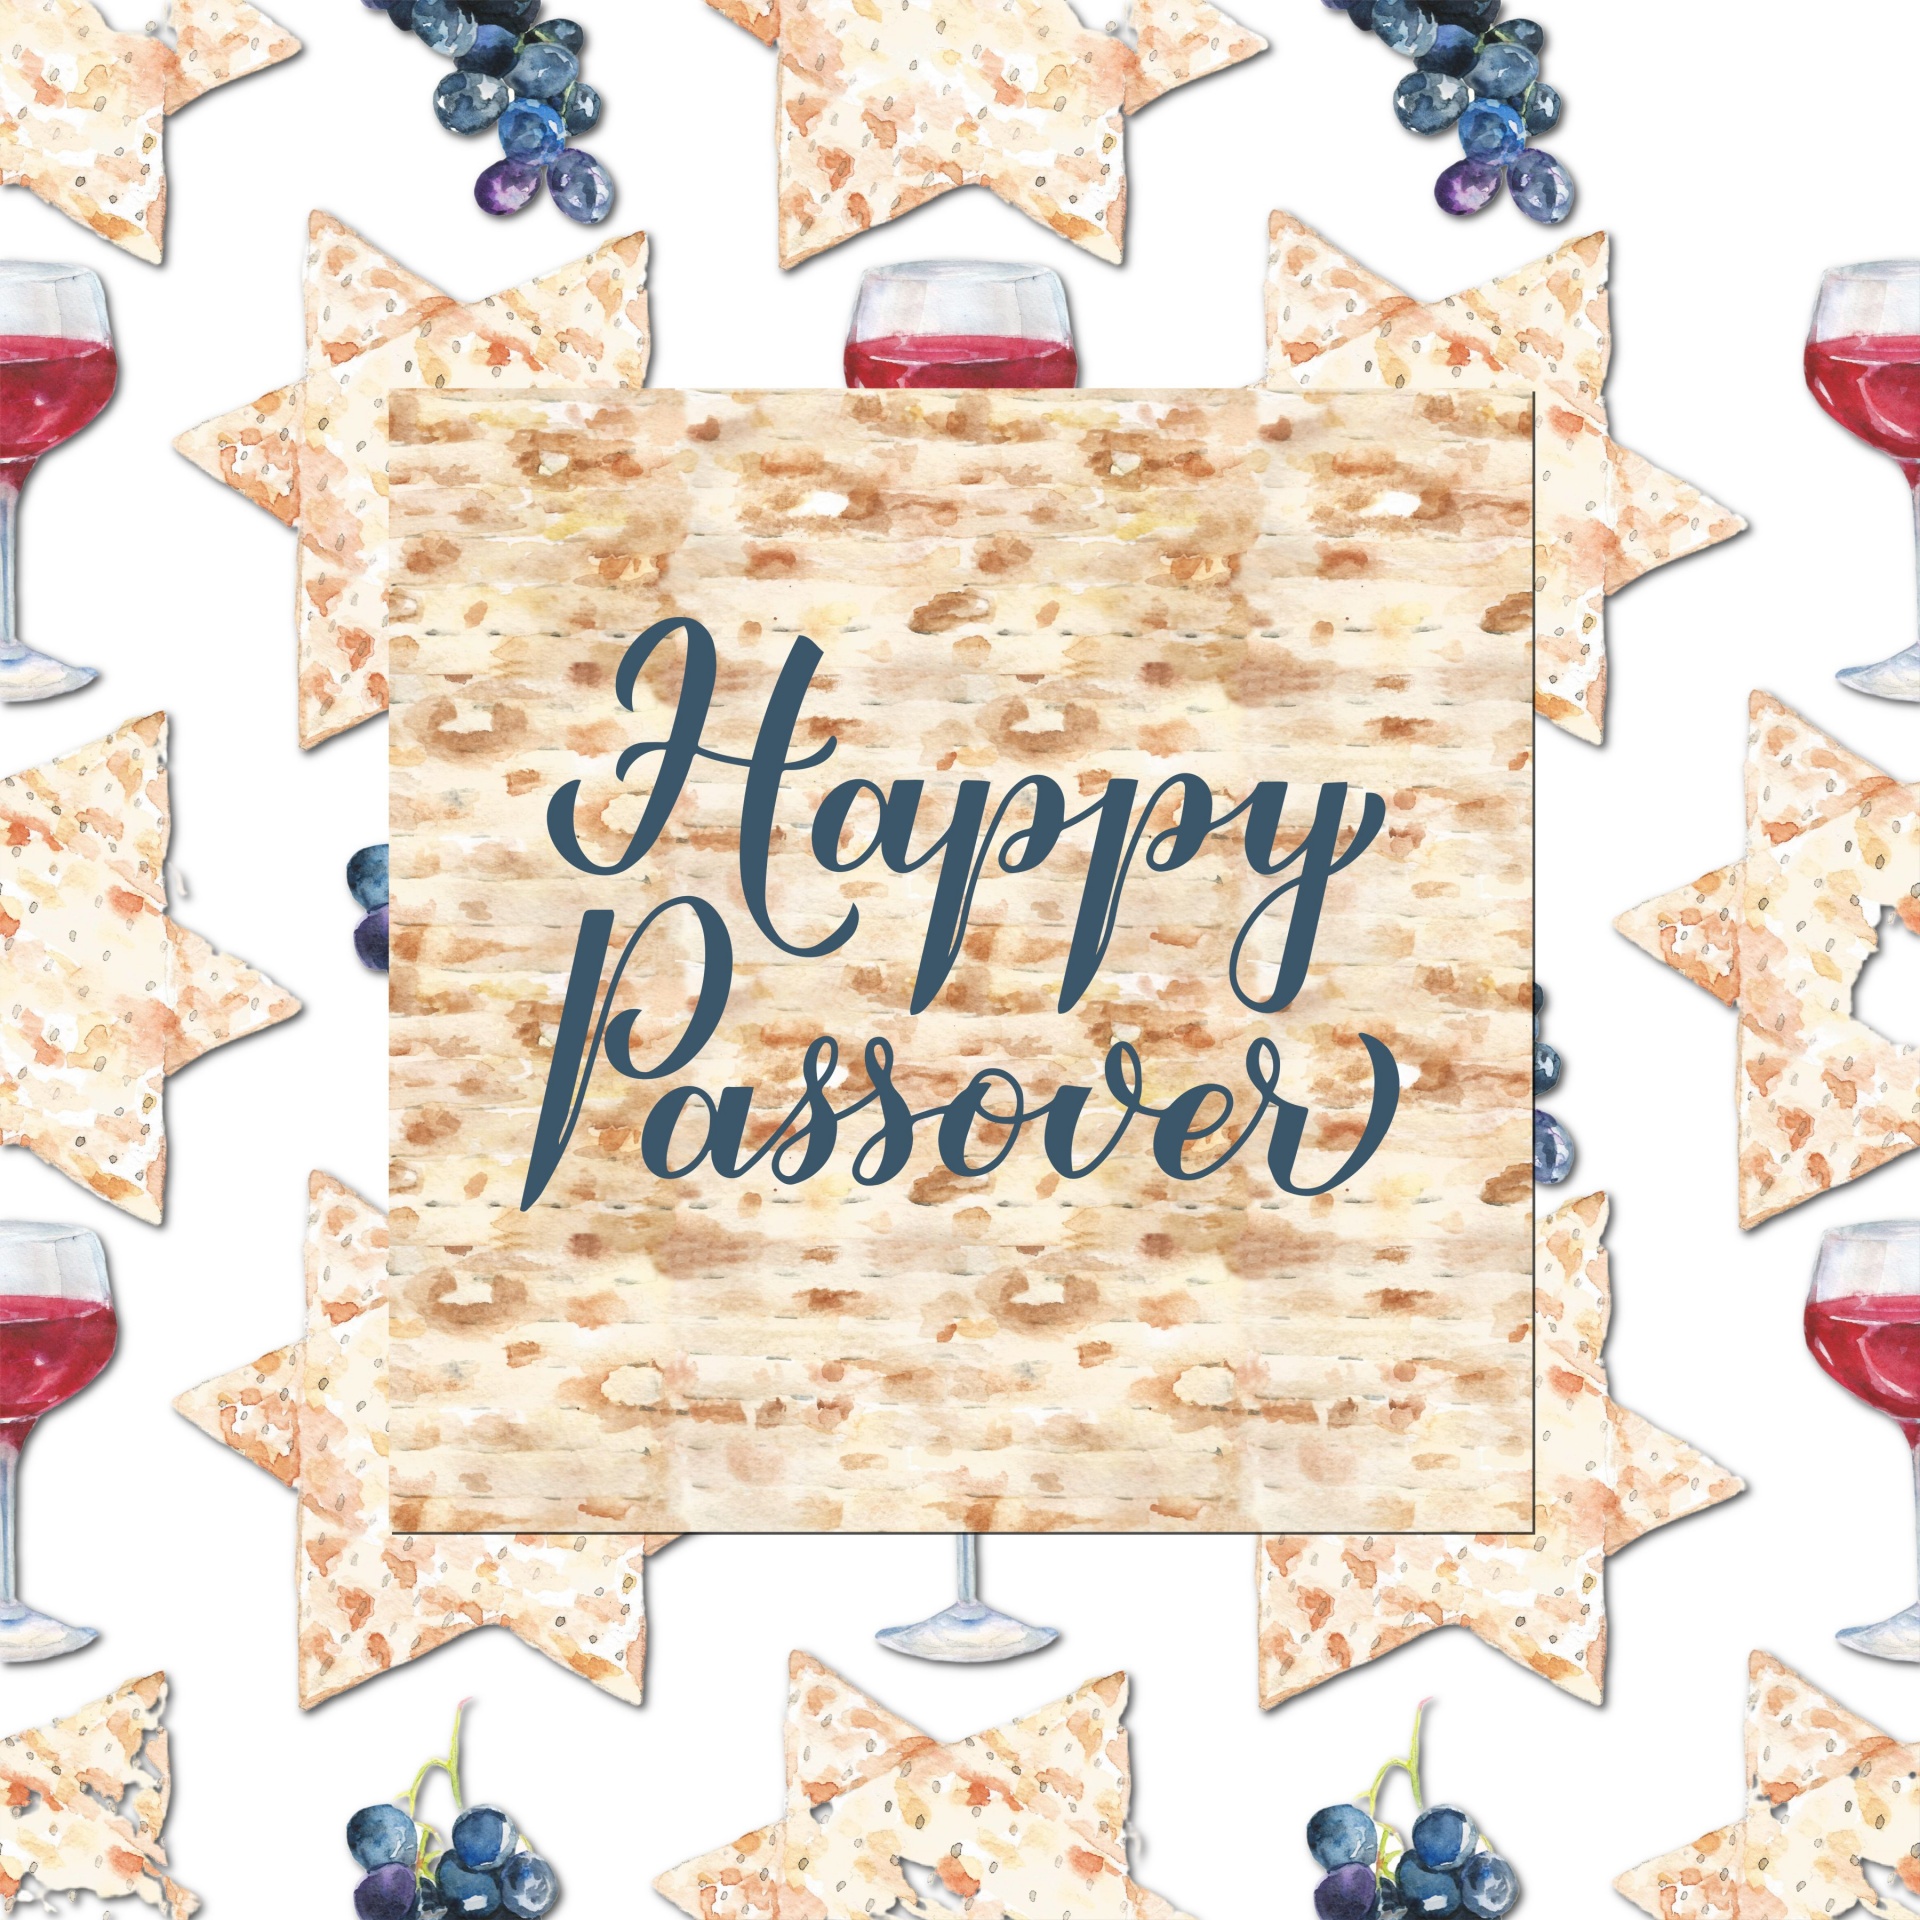 Matzo Cracker Passover Greeting Free Stock Photo - Public Domain Pictures